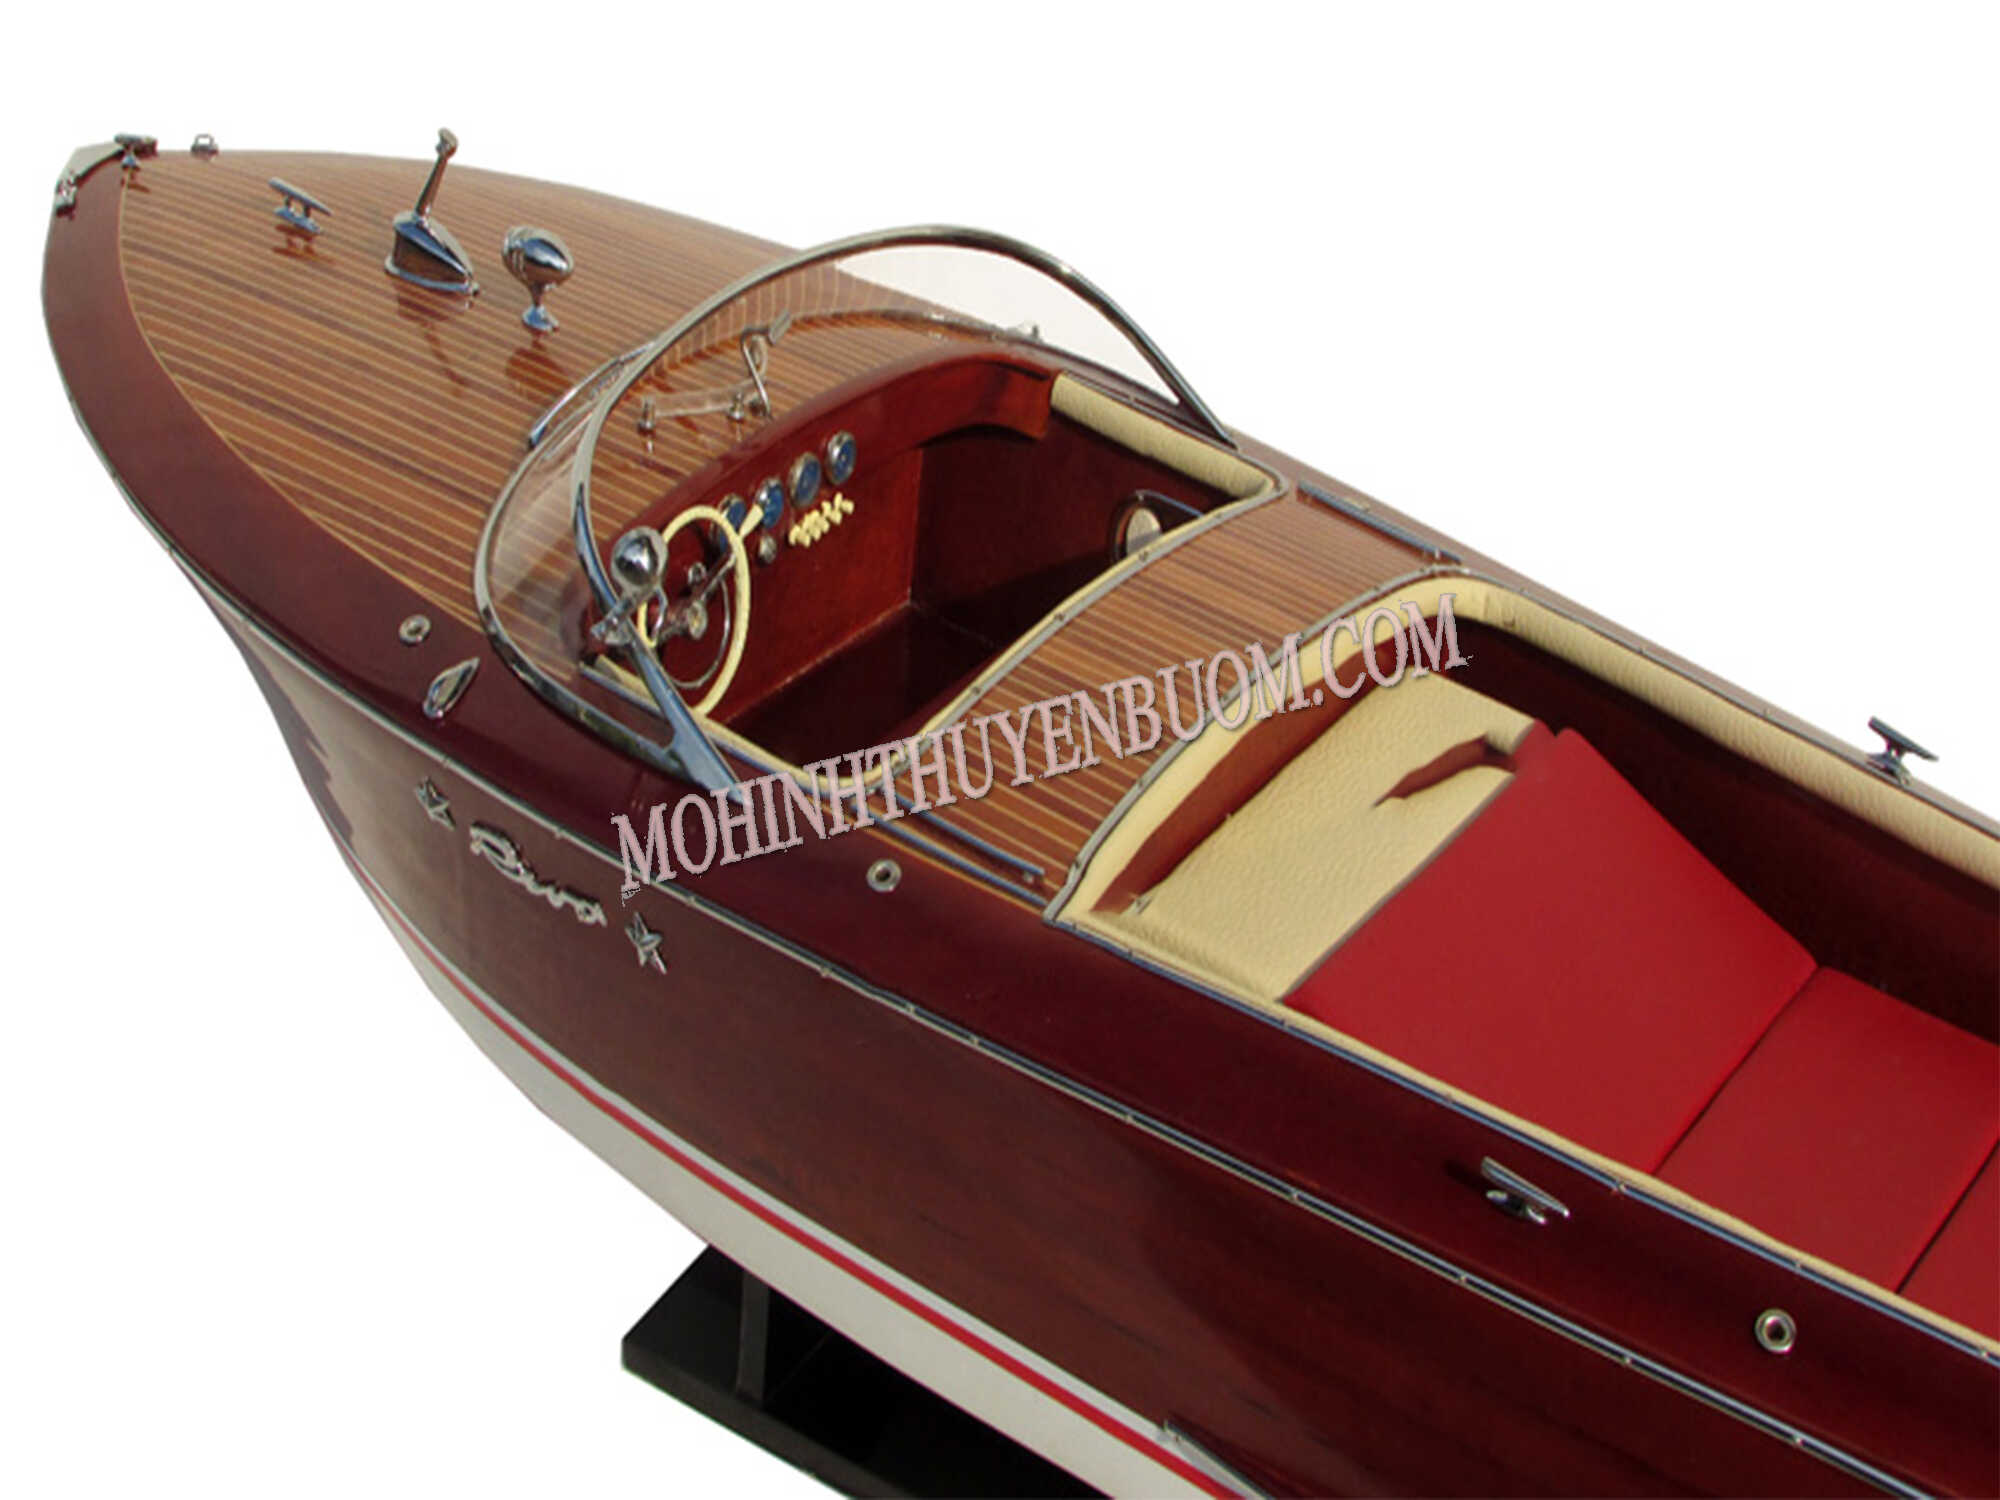 Super Riva Florida Classic Speed Boat Model 34.2"